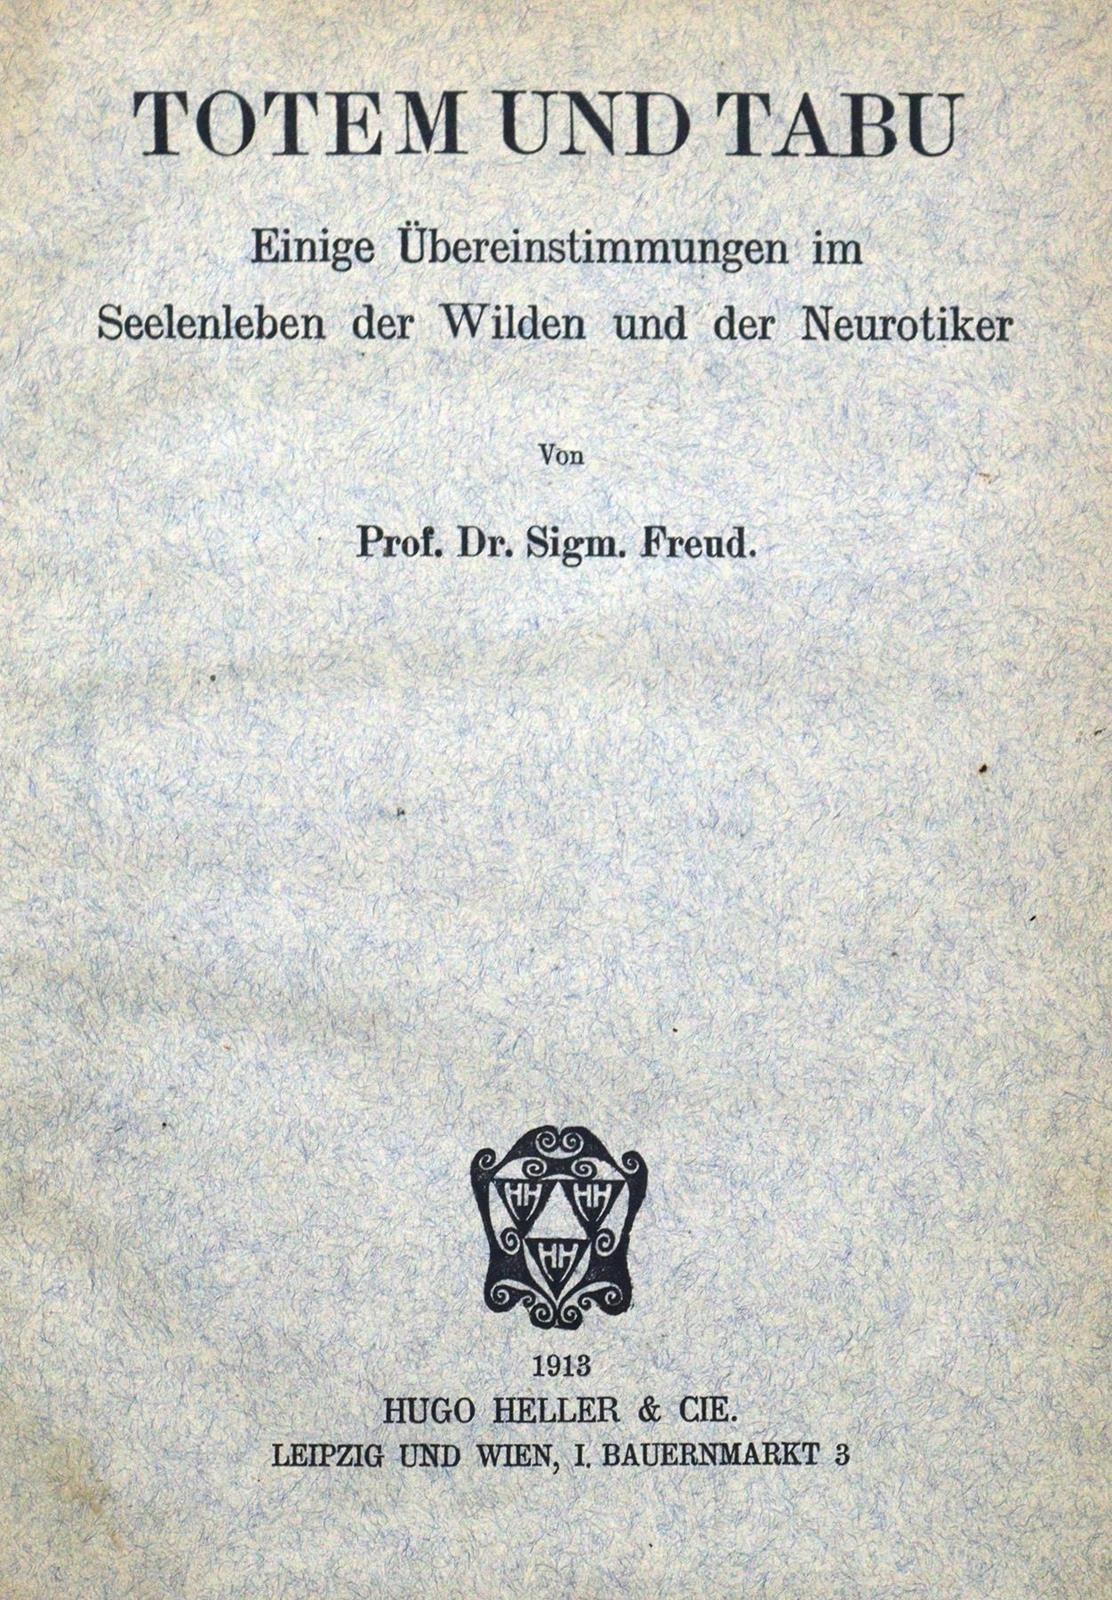 Freud,S. 图腾与禁忌。野蛮人和神经病人的灵魂生活中的一些相似之处。Lpz.和维也纳，Heller 1913年。3叶，149页，平装d.Zt.（OU装订，&hellip;